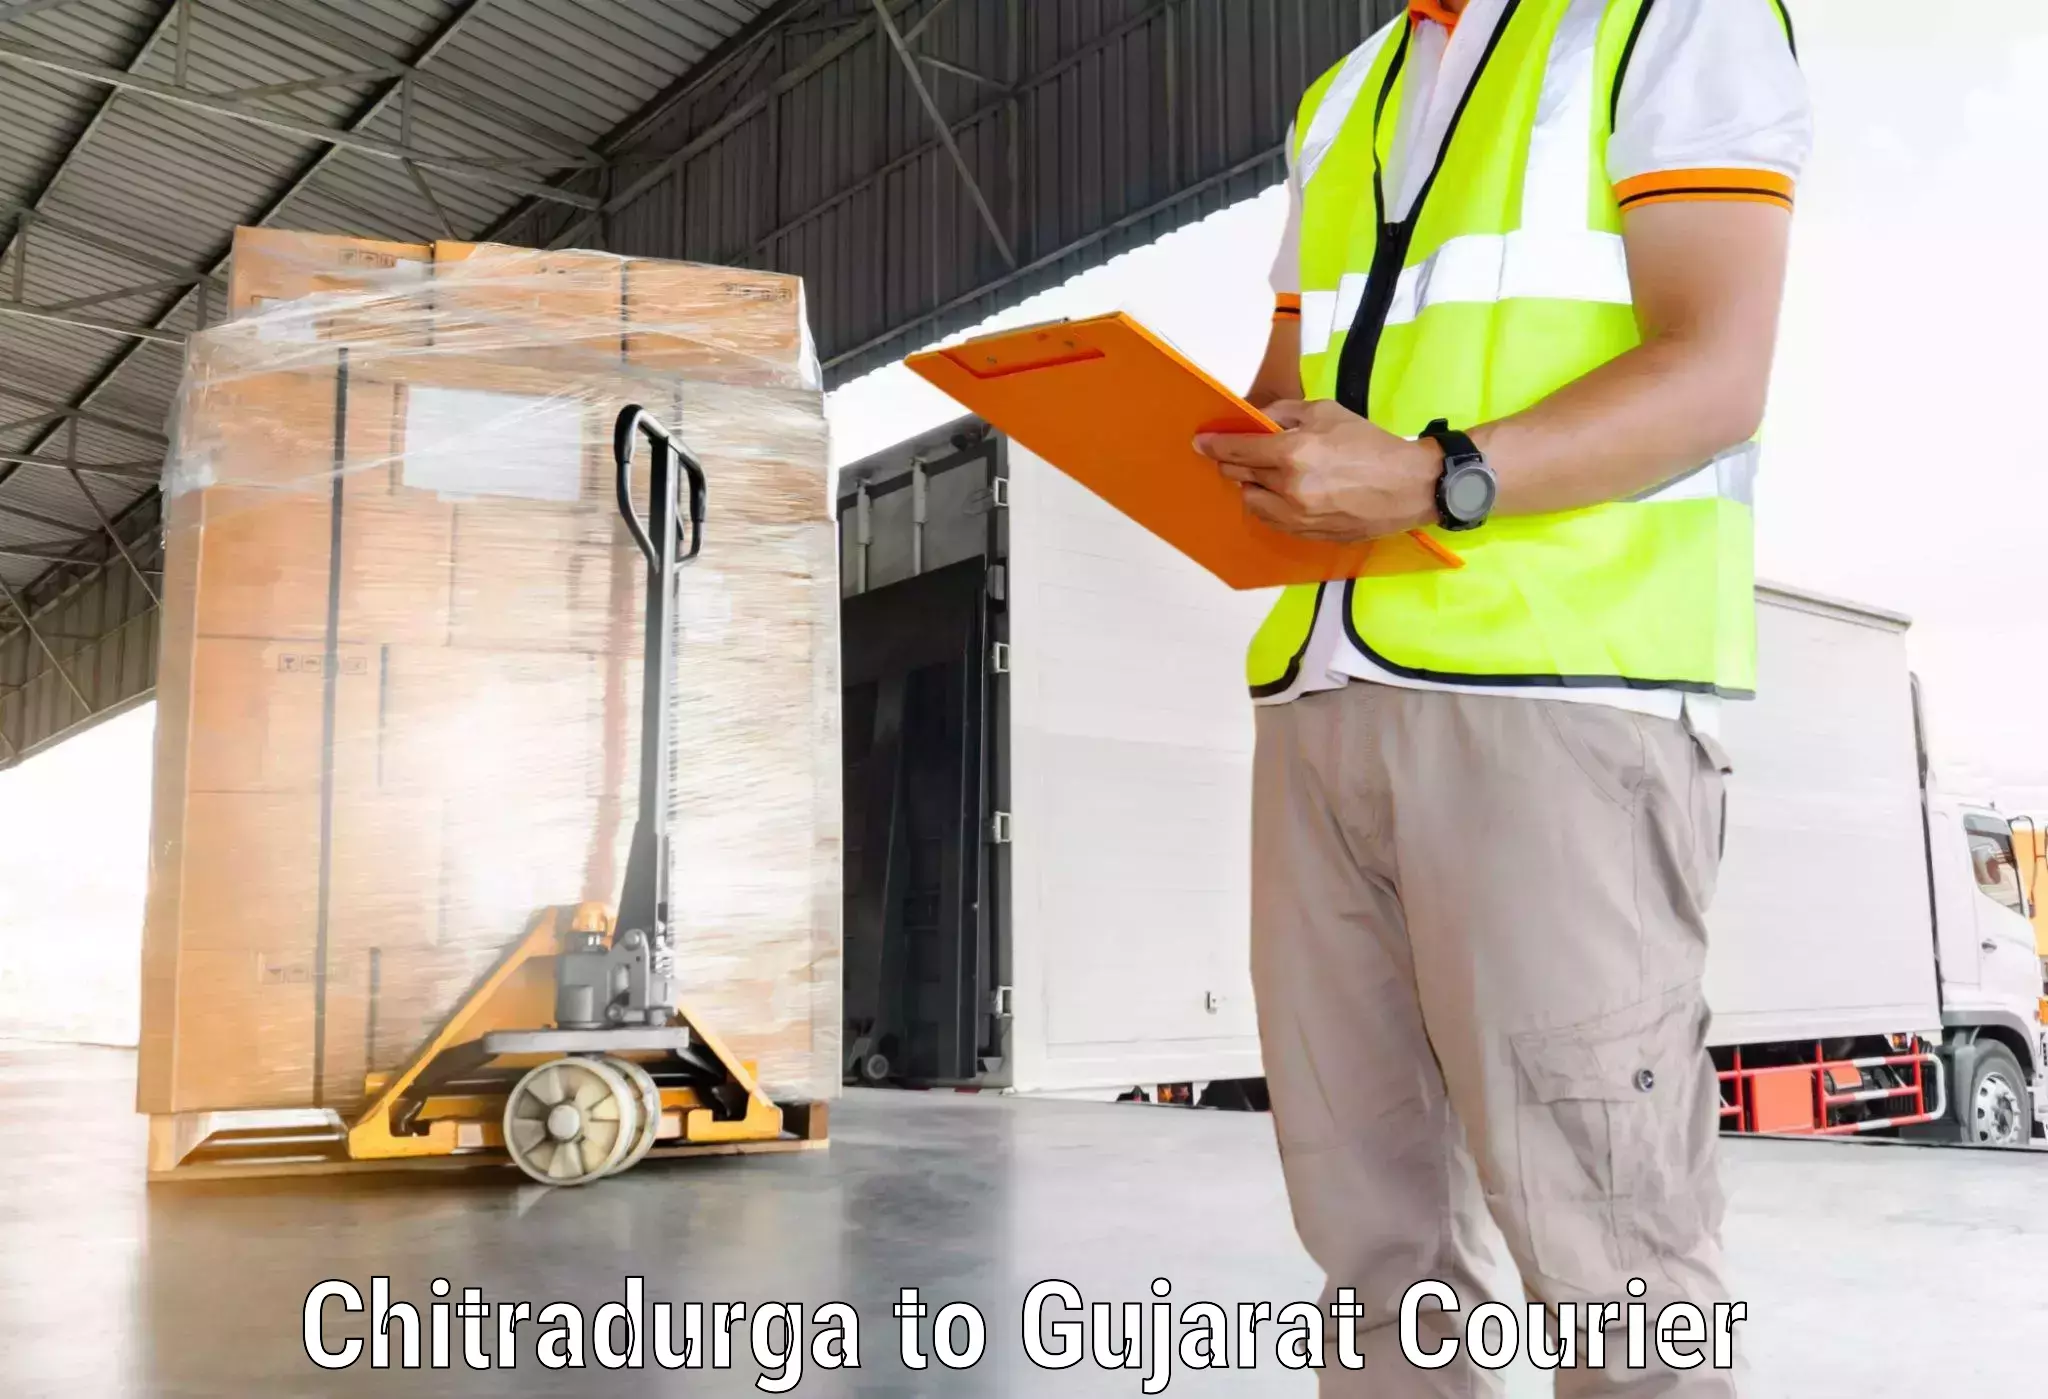 State-of-the-art courier technology Chitradurga to Bavla